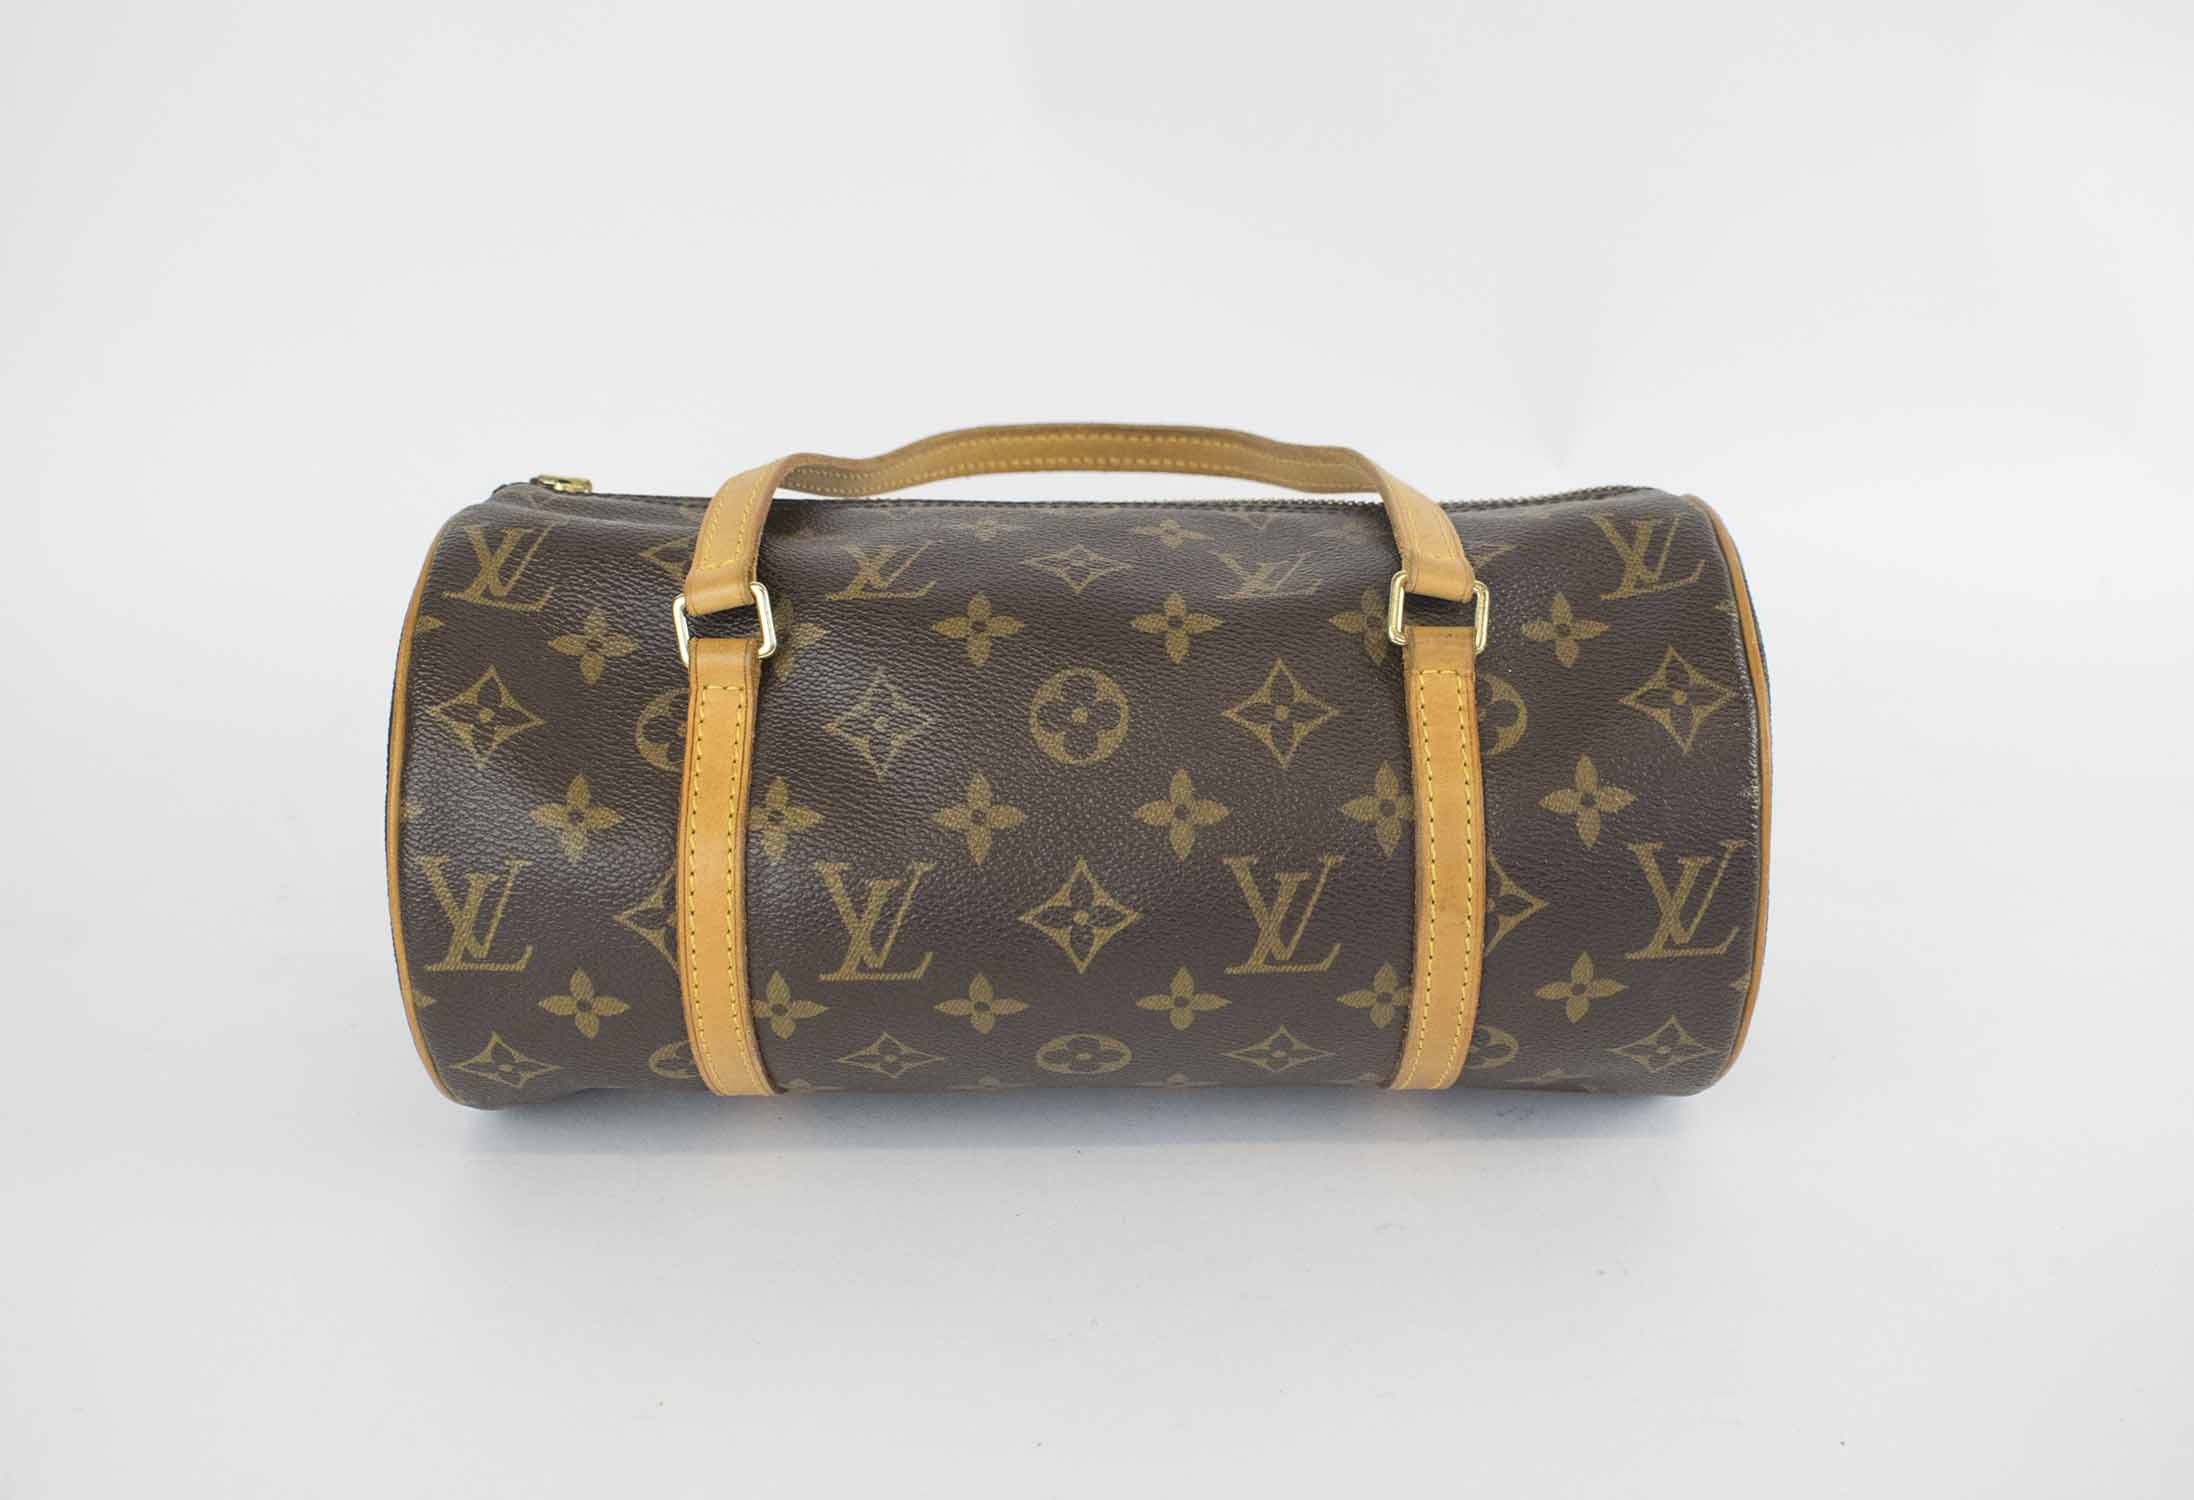 Sold at Auction: Louis Vuitton crossbody saddle bag